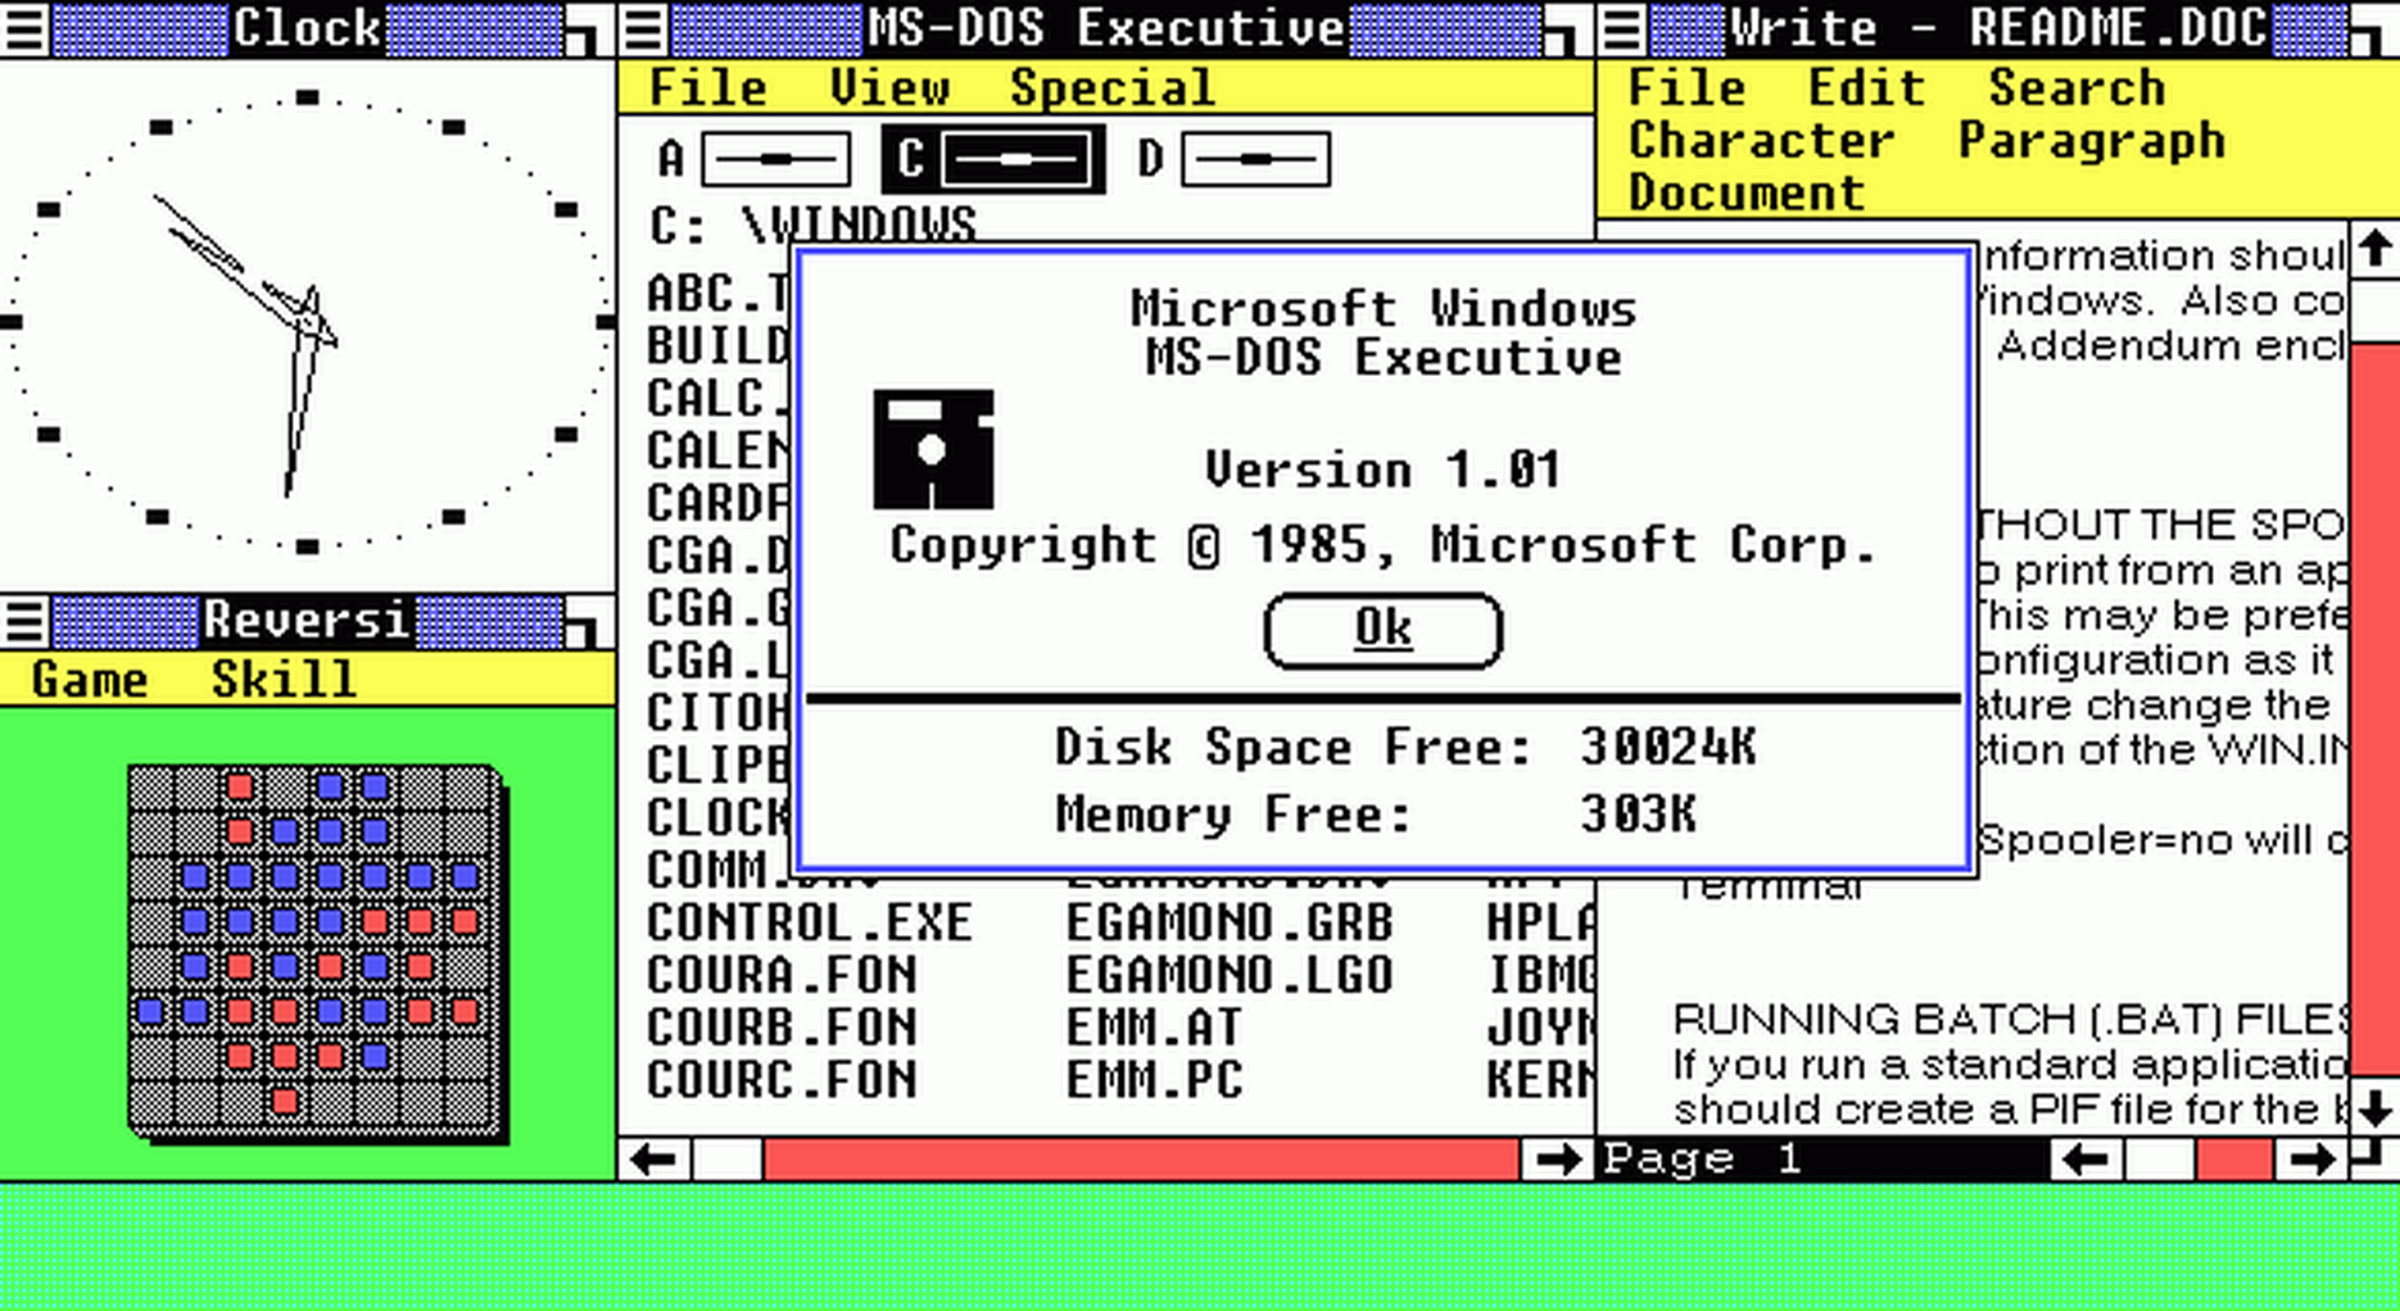 Visual history of Windows